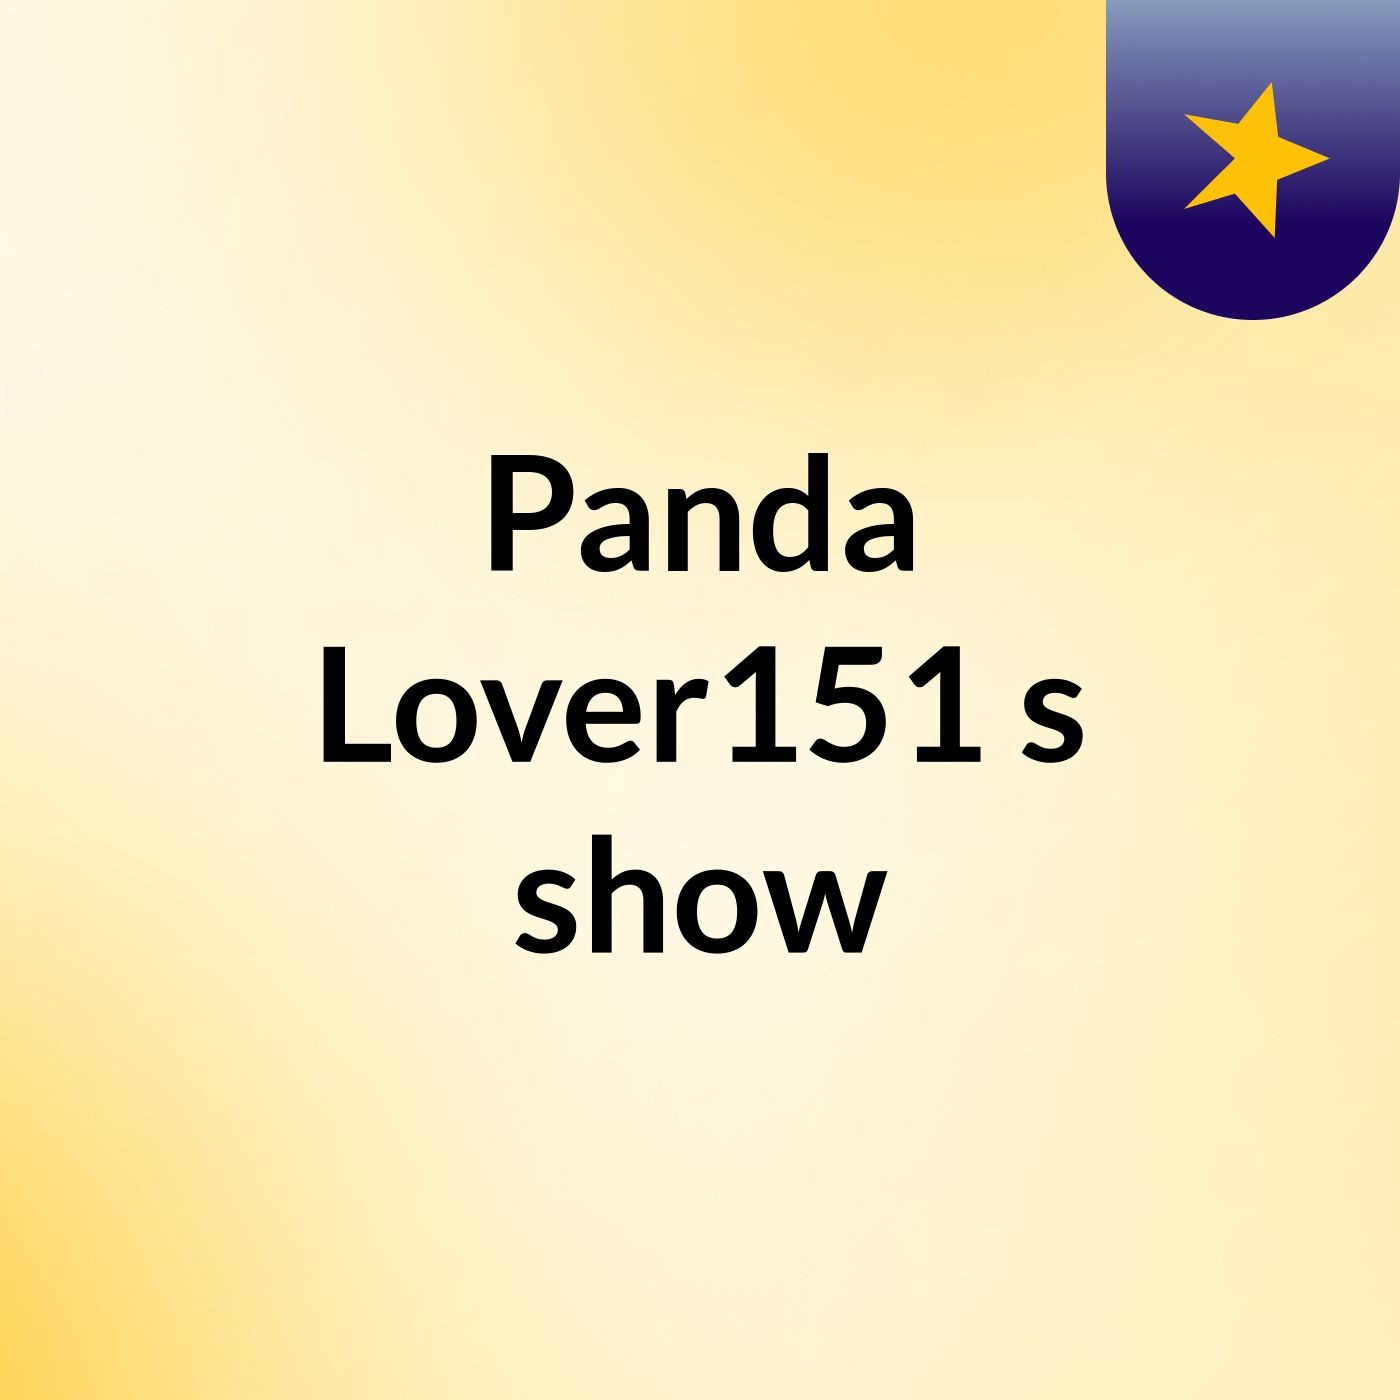 Panda Lover151's show